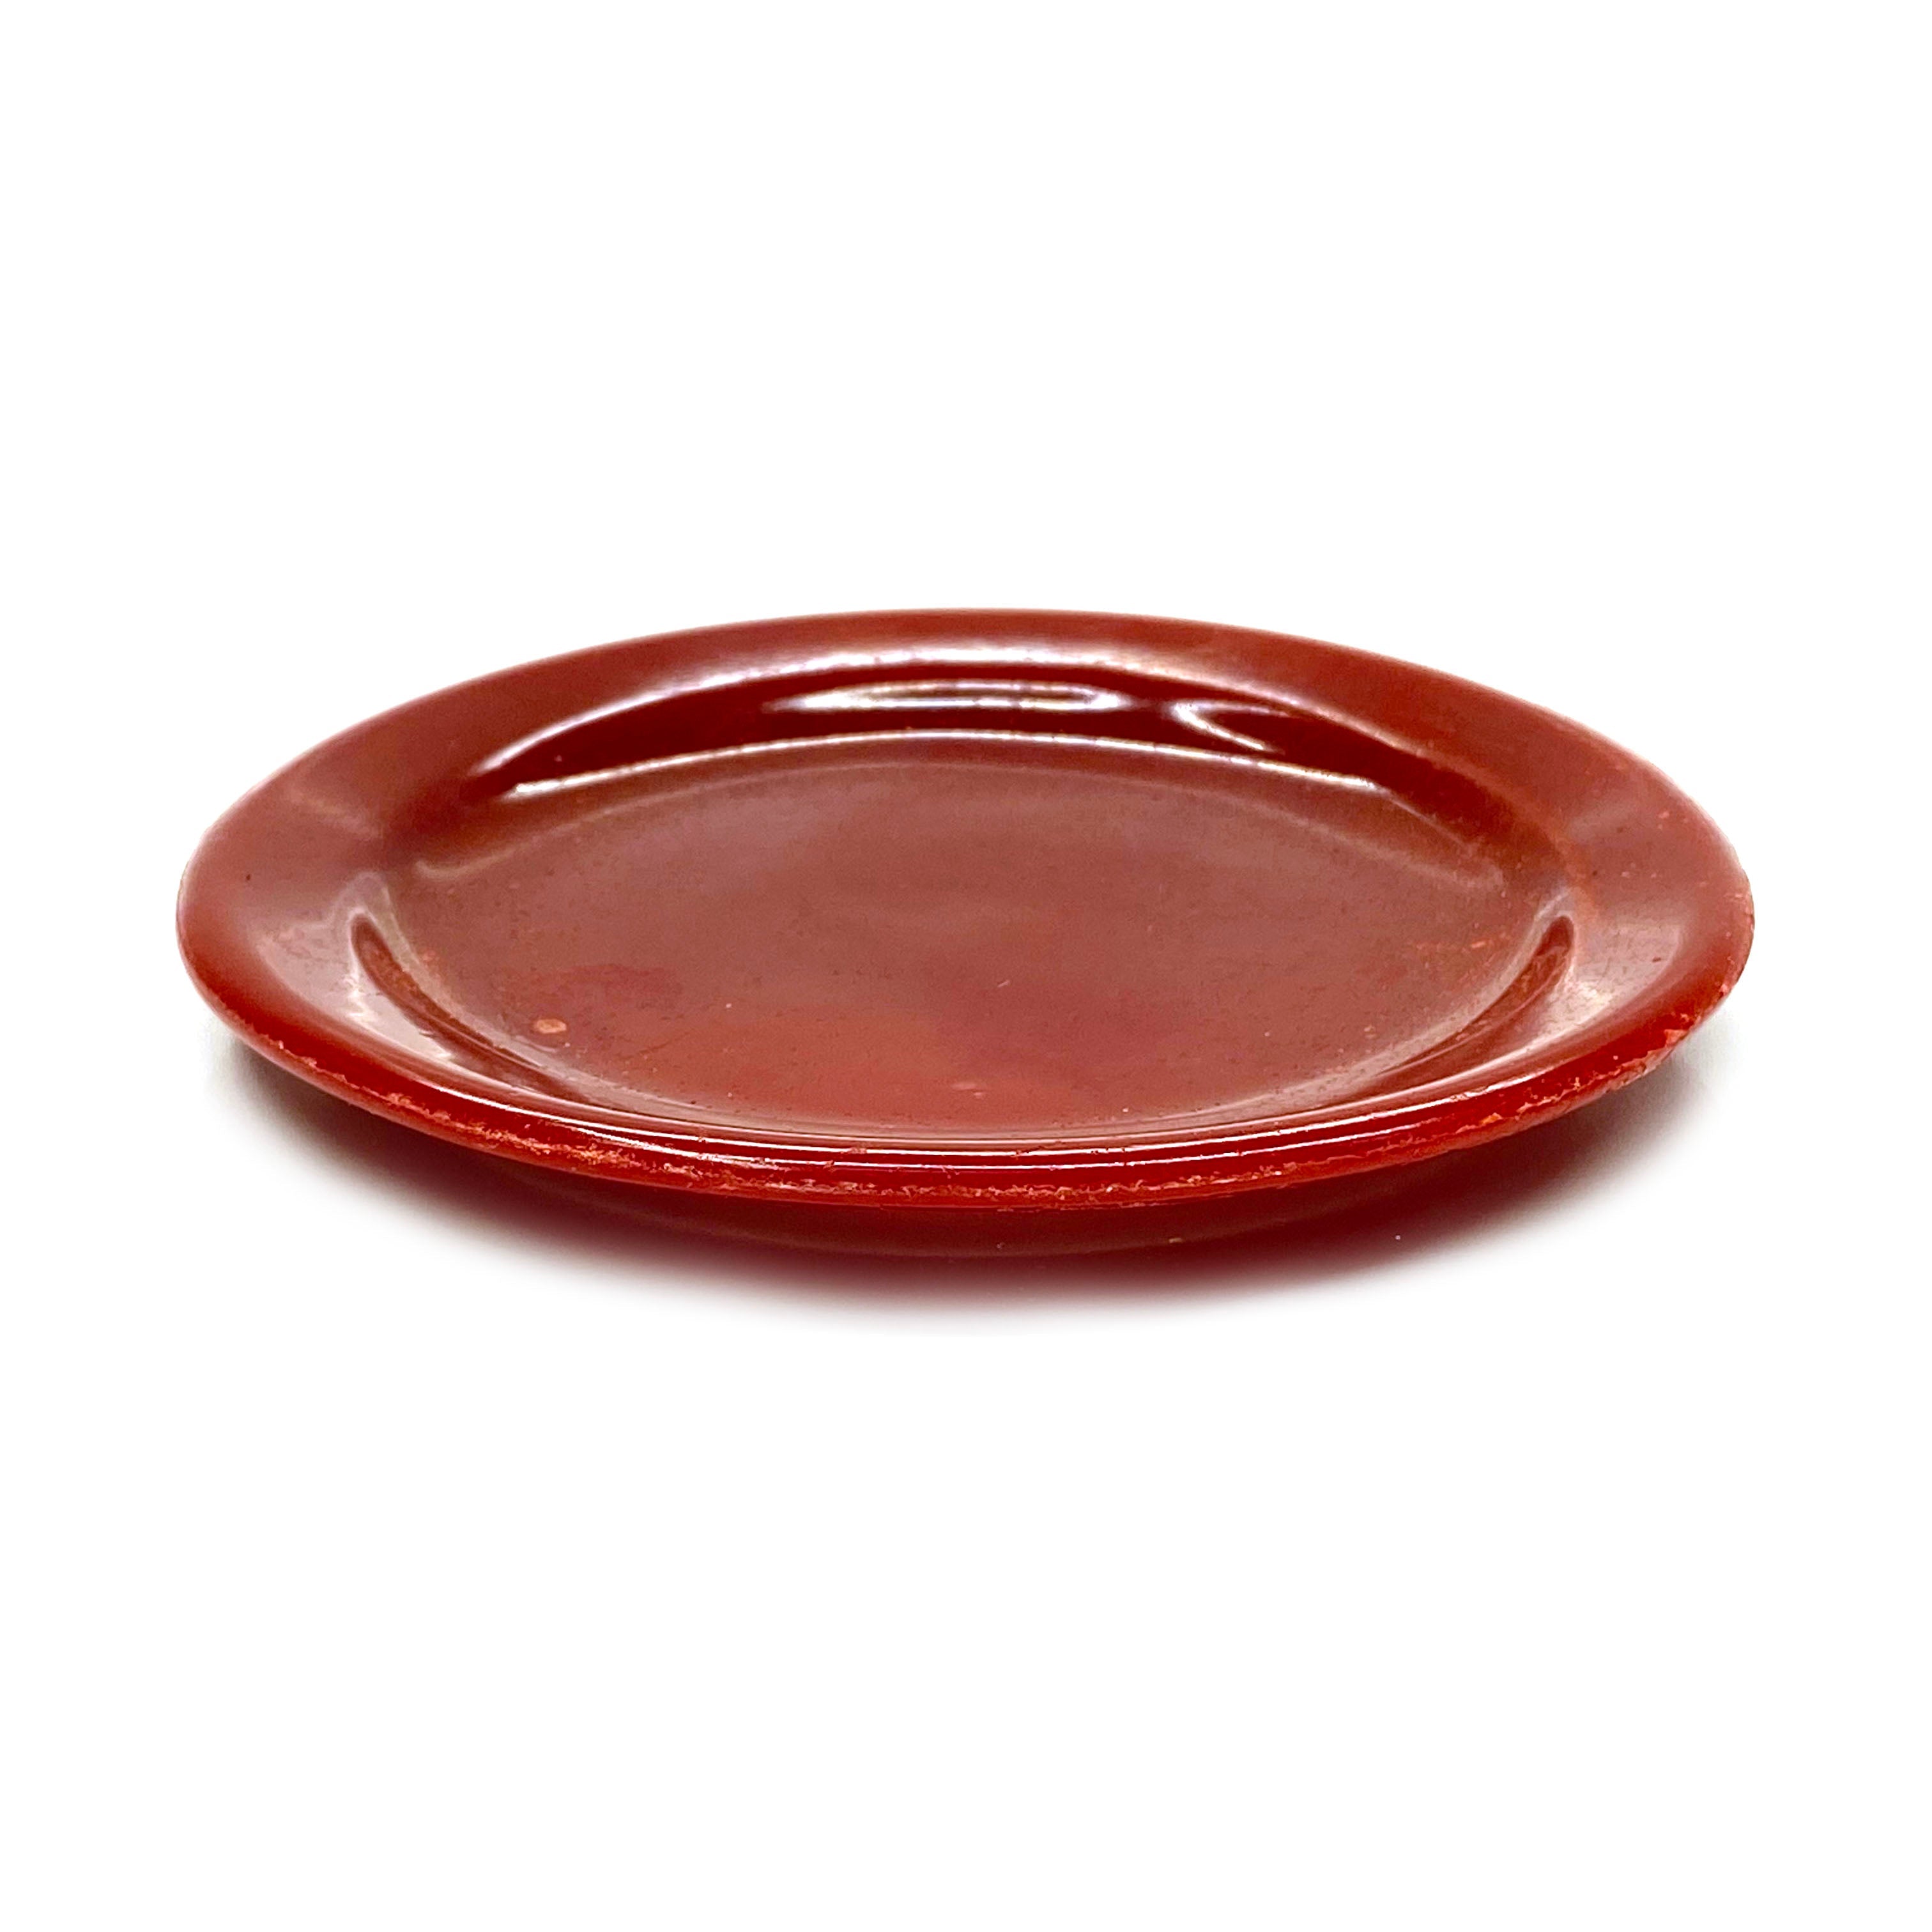 SMASHProps Breakaway Small Dinner Plate Prop - RED opaque - Red,Opaque